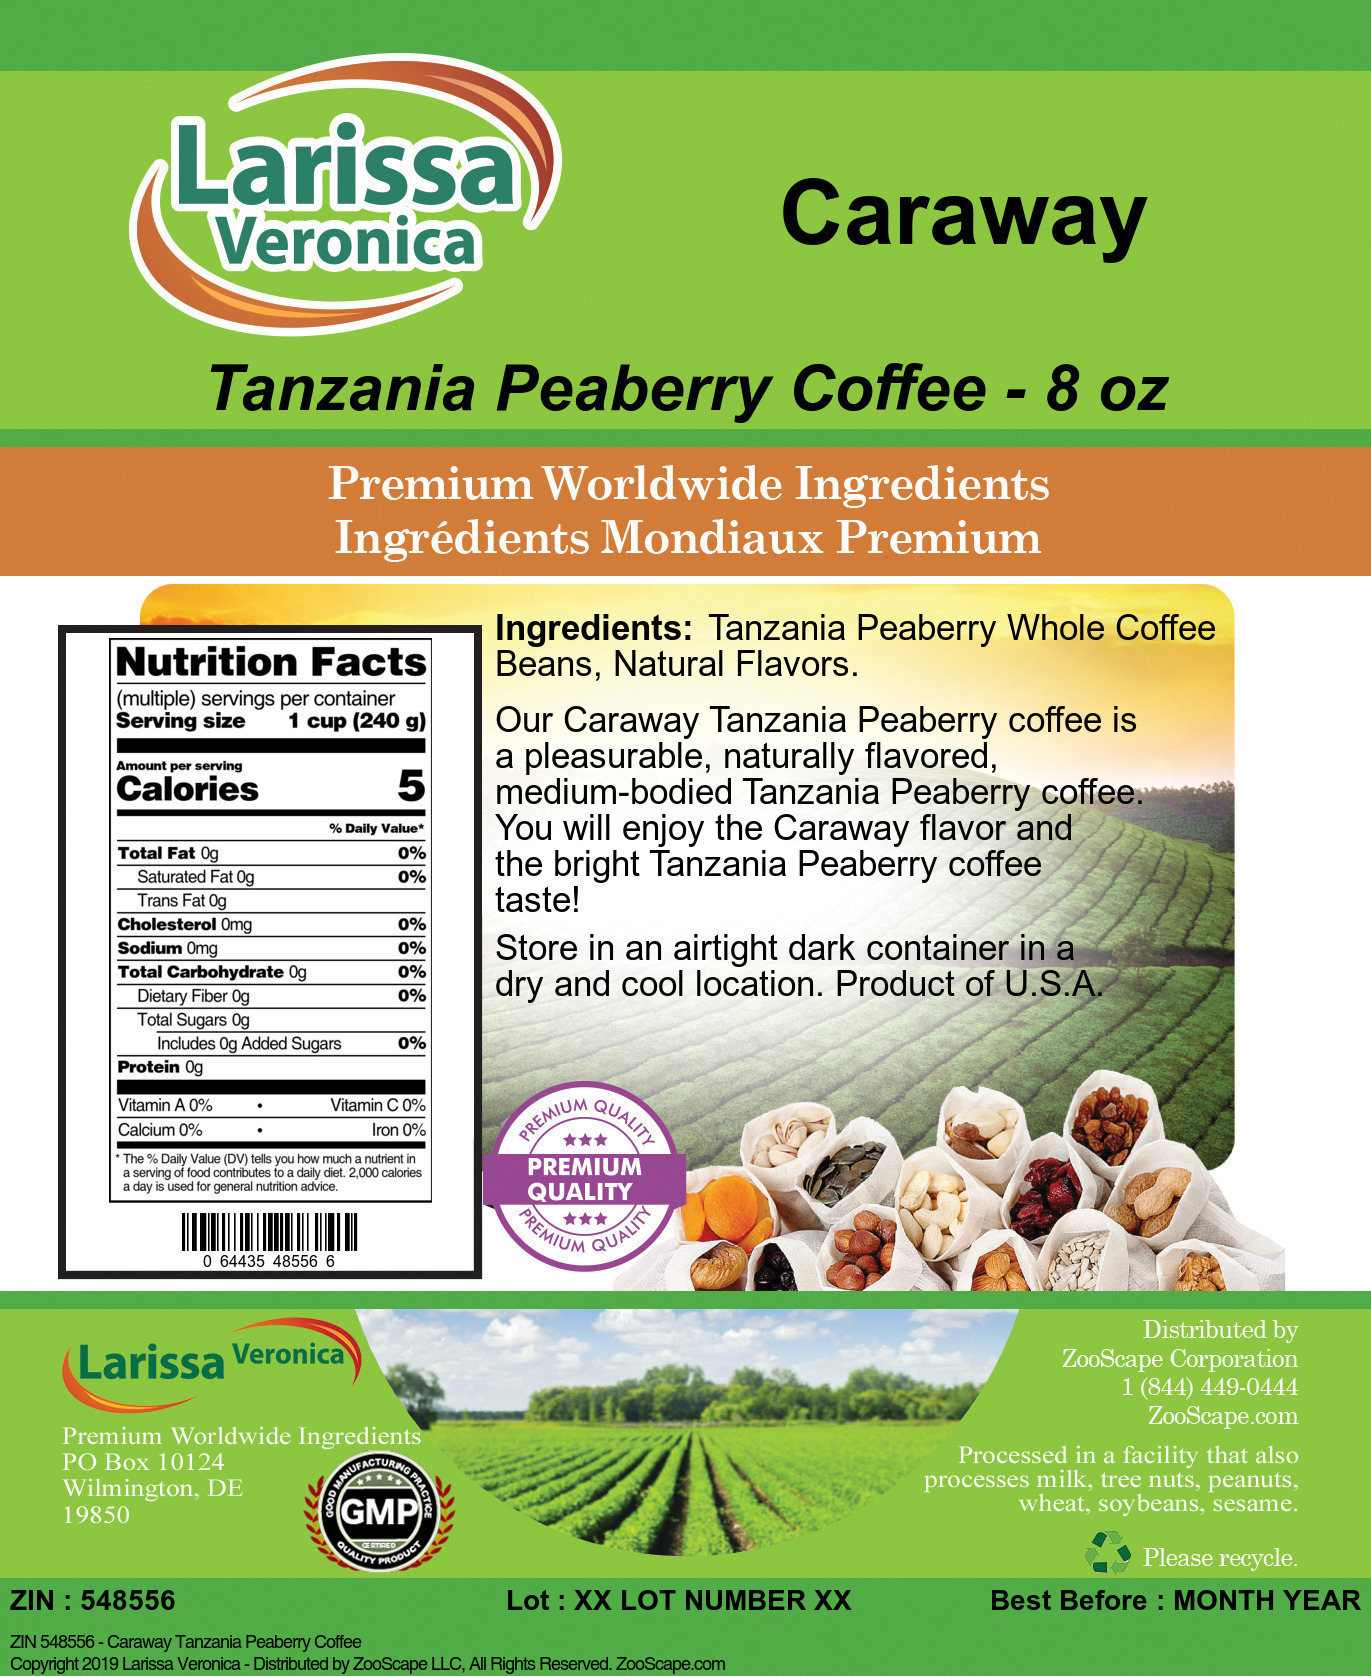 Caraway Tanzania Peaberry Coffee - Label